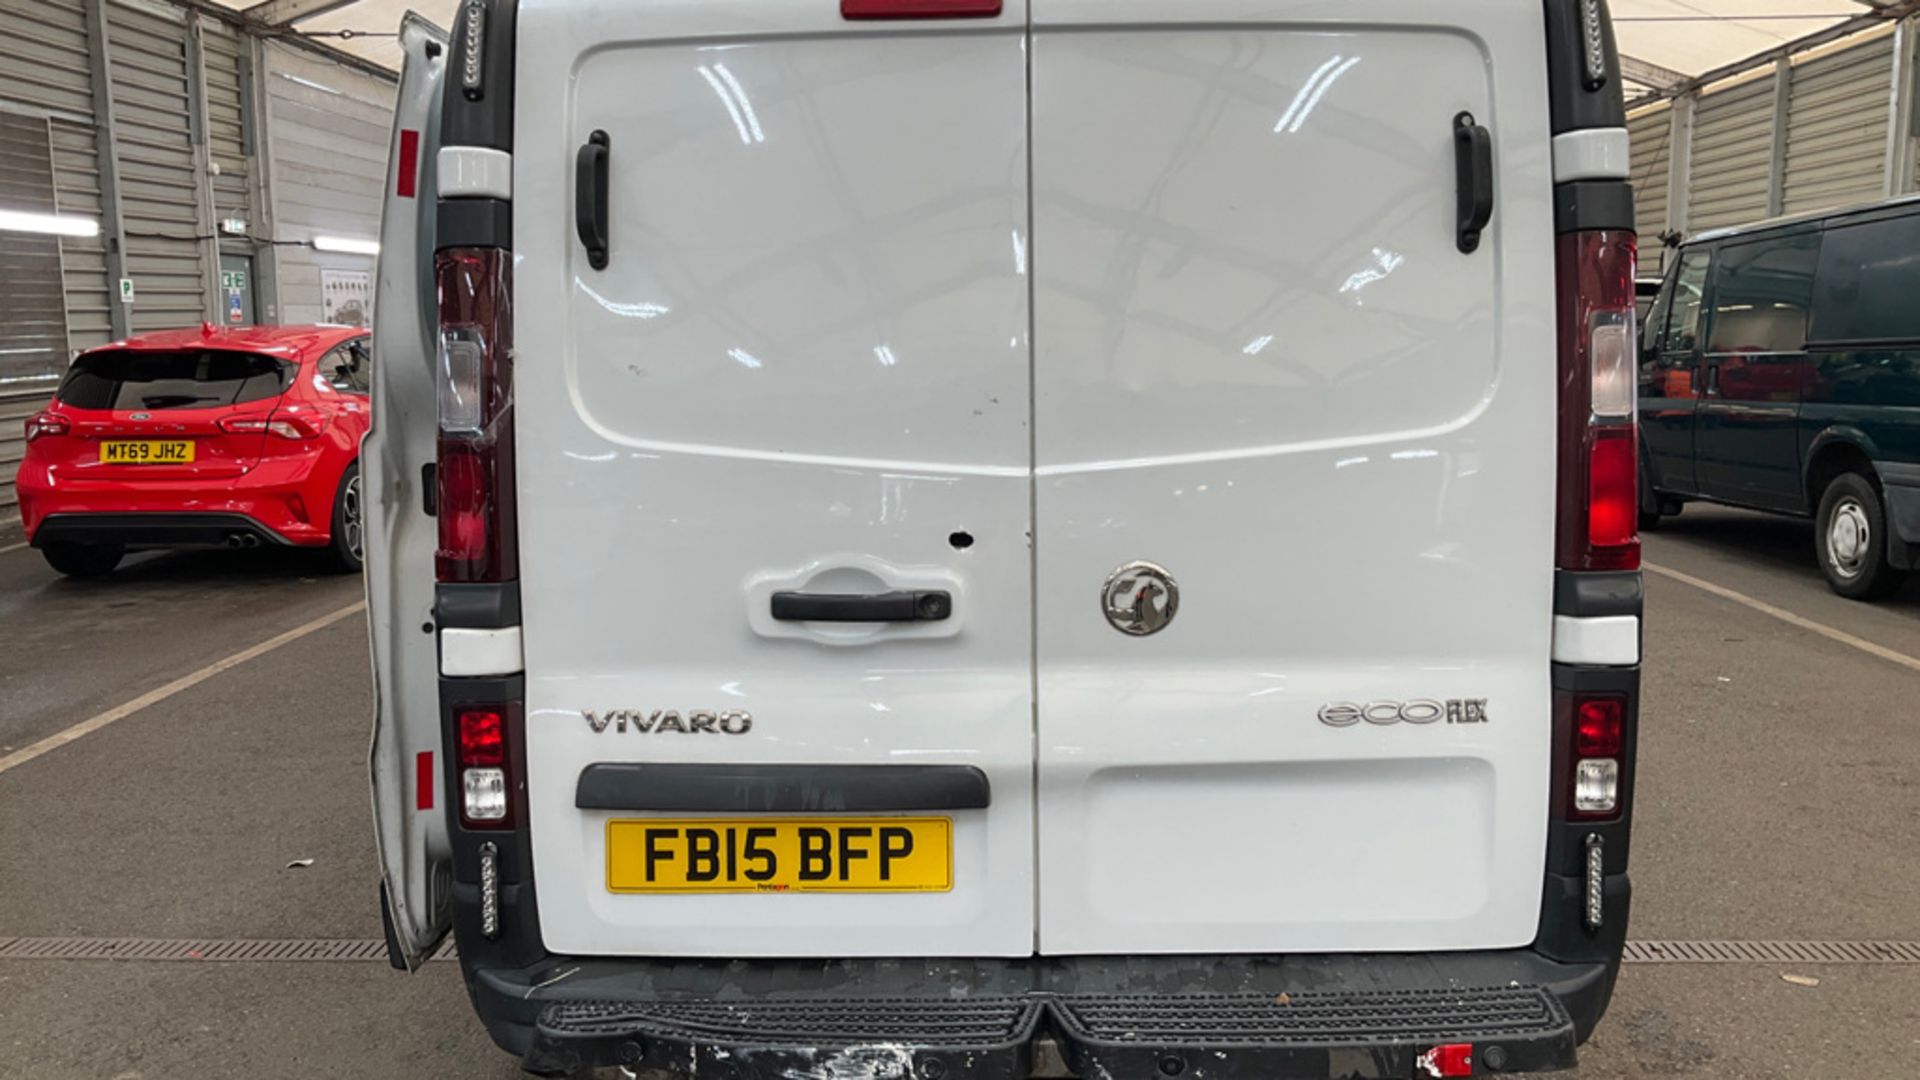 ** ON SALE ** Vauxhall Vivaro 1.6 Cdti 90 Ecoflex 2.9T H1L1 2015 '15 Reg'-Parking Sensors-Bluetooth - Image 5 of 9